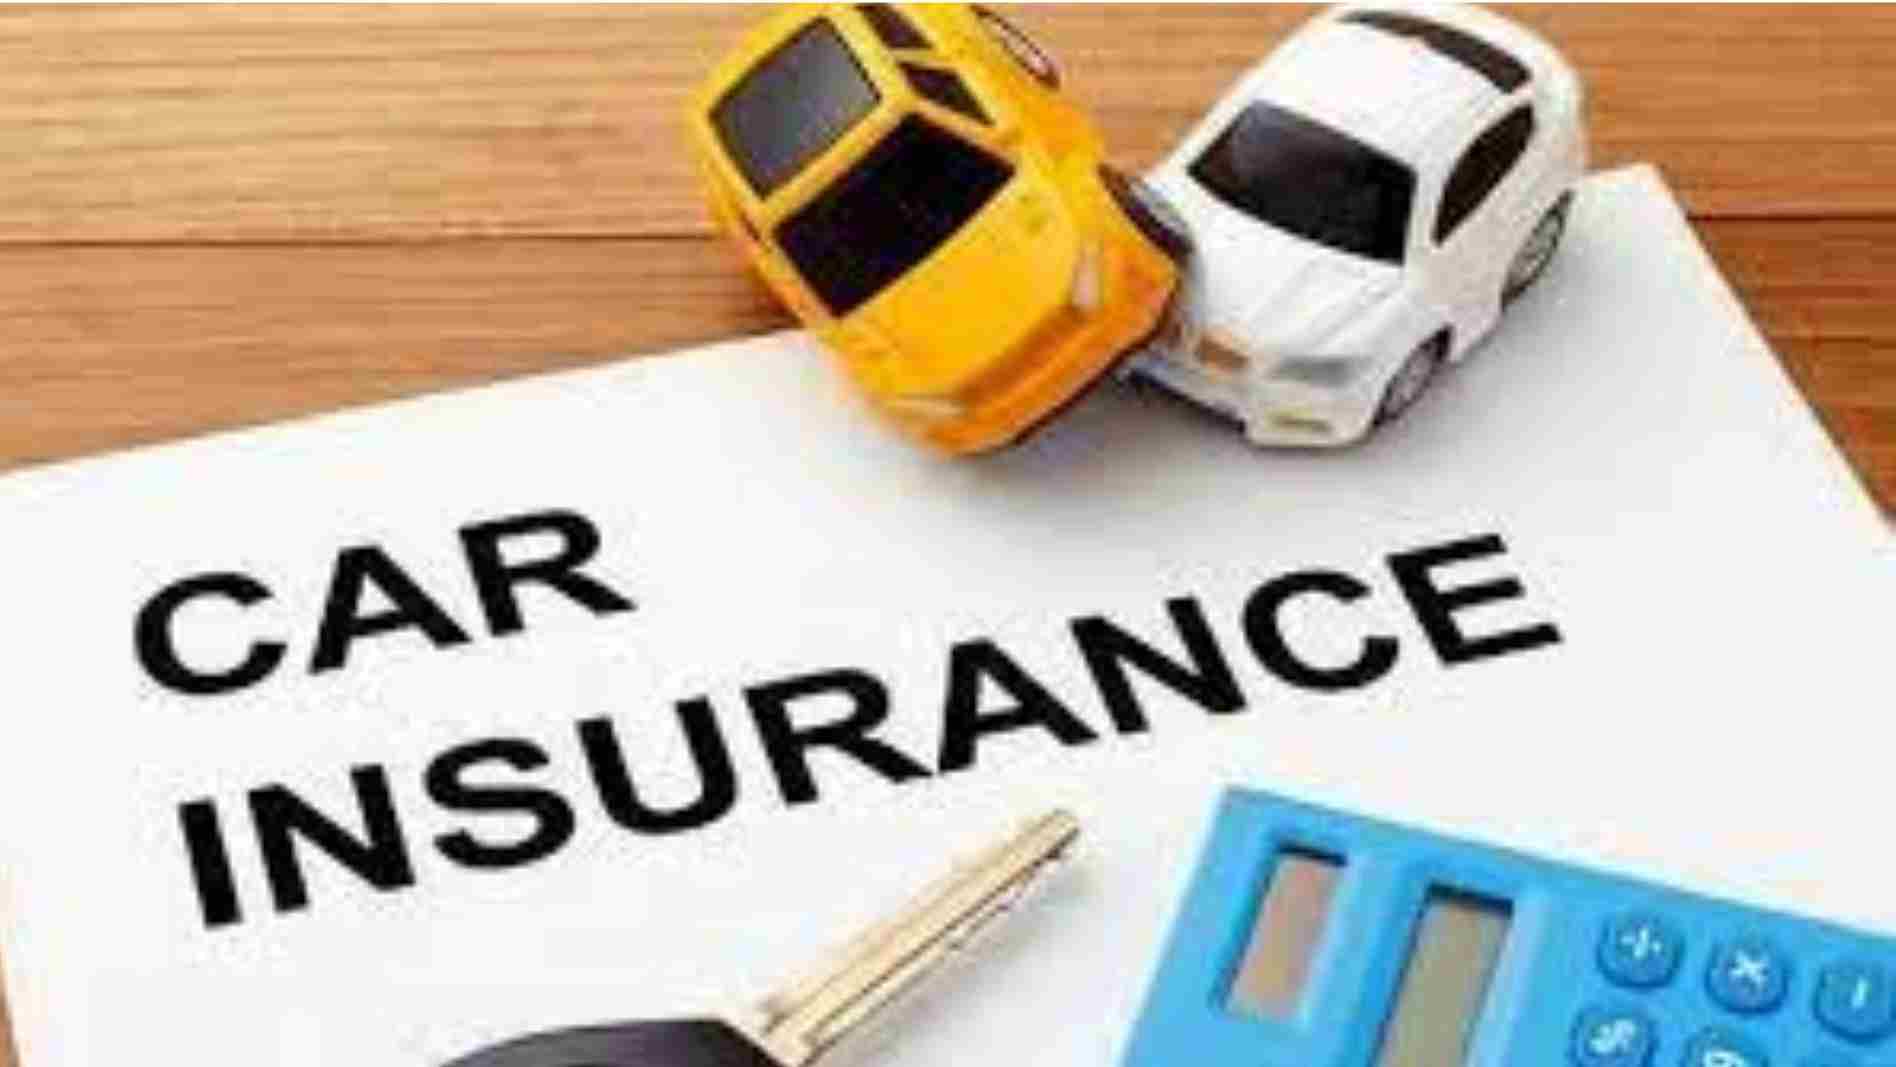 Car Insurance in India